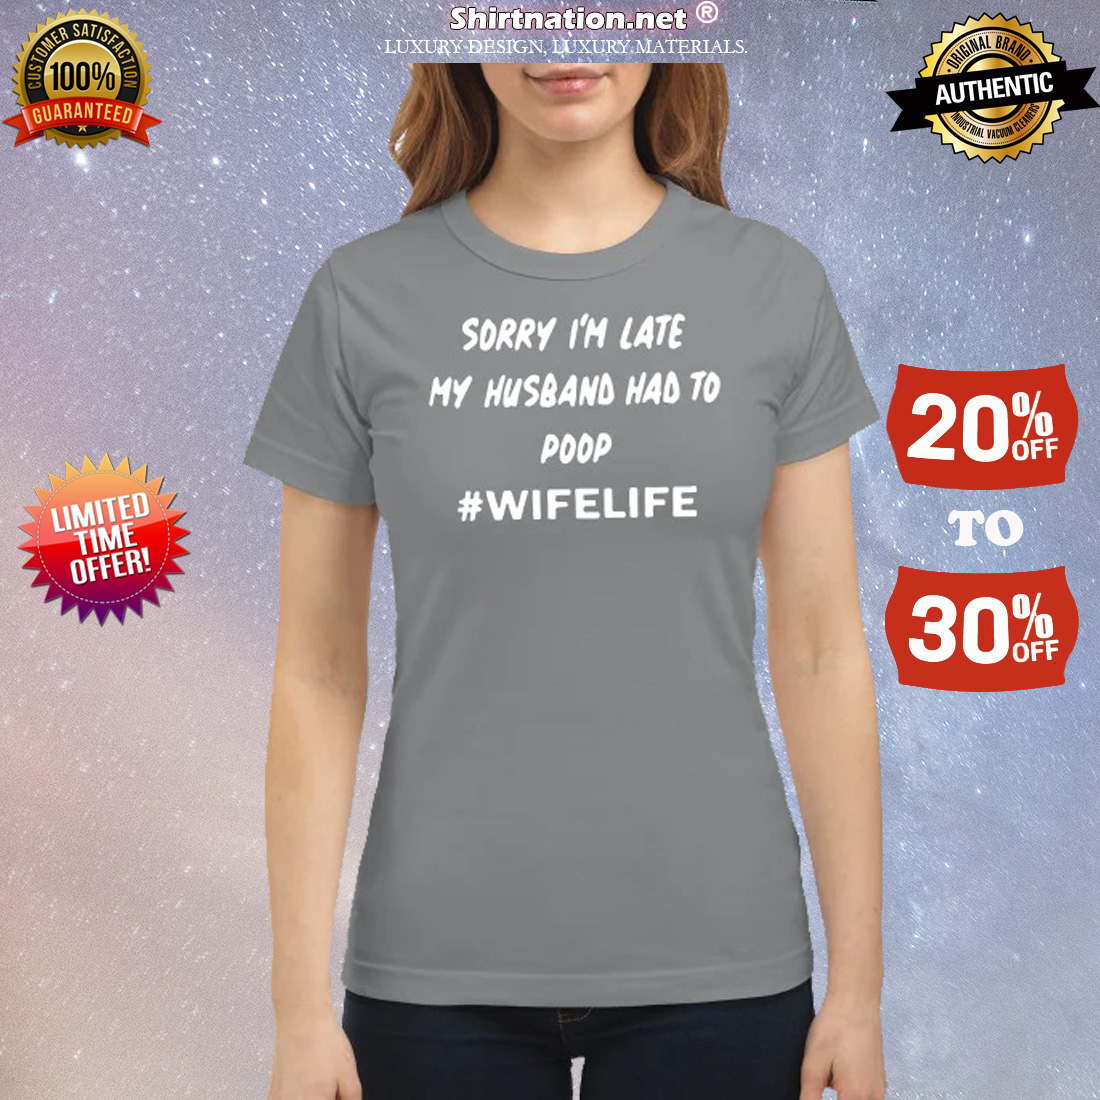 Sorry I'm late my husband had to poop wifelife classic shirt